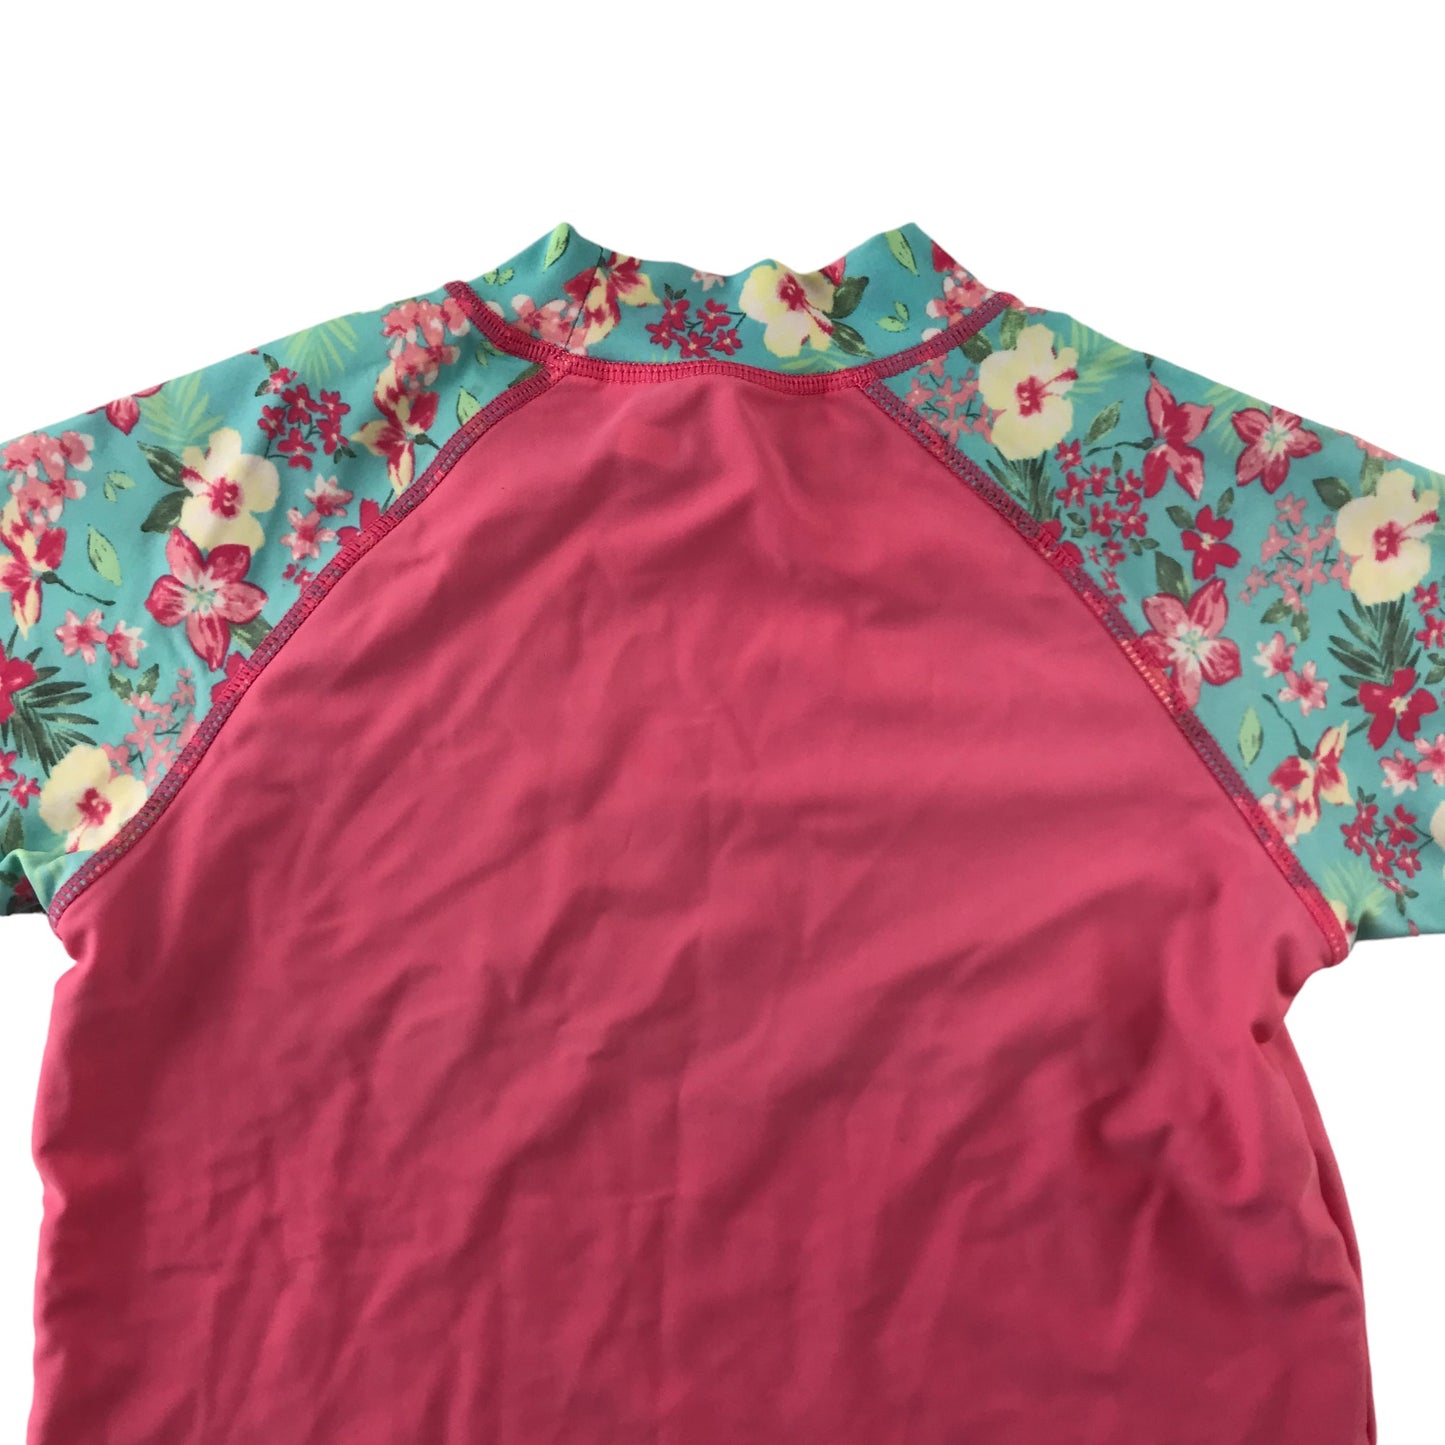 Tu Swim Top Age 8 Pink Floral Short Sleeve